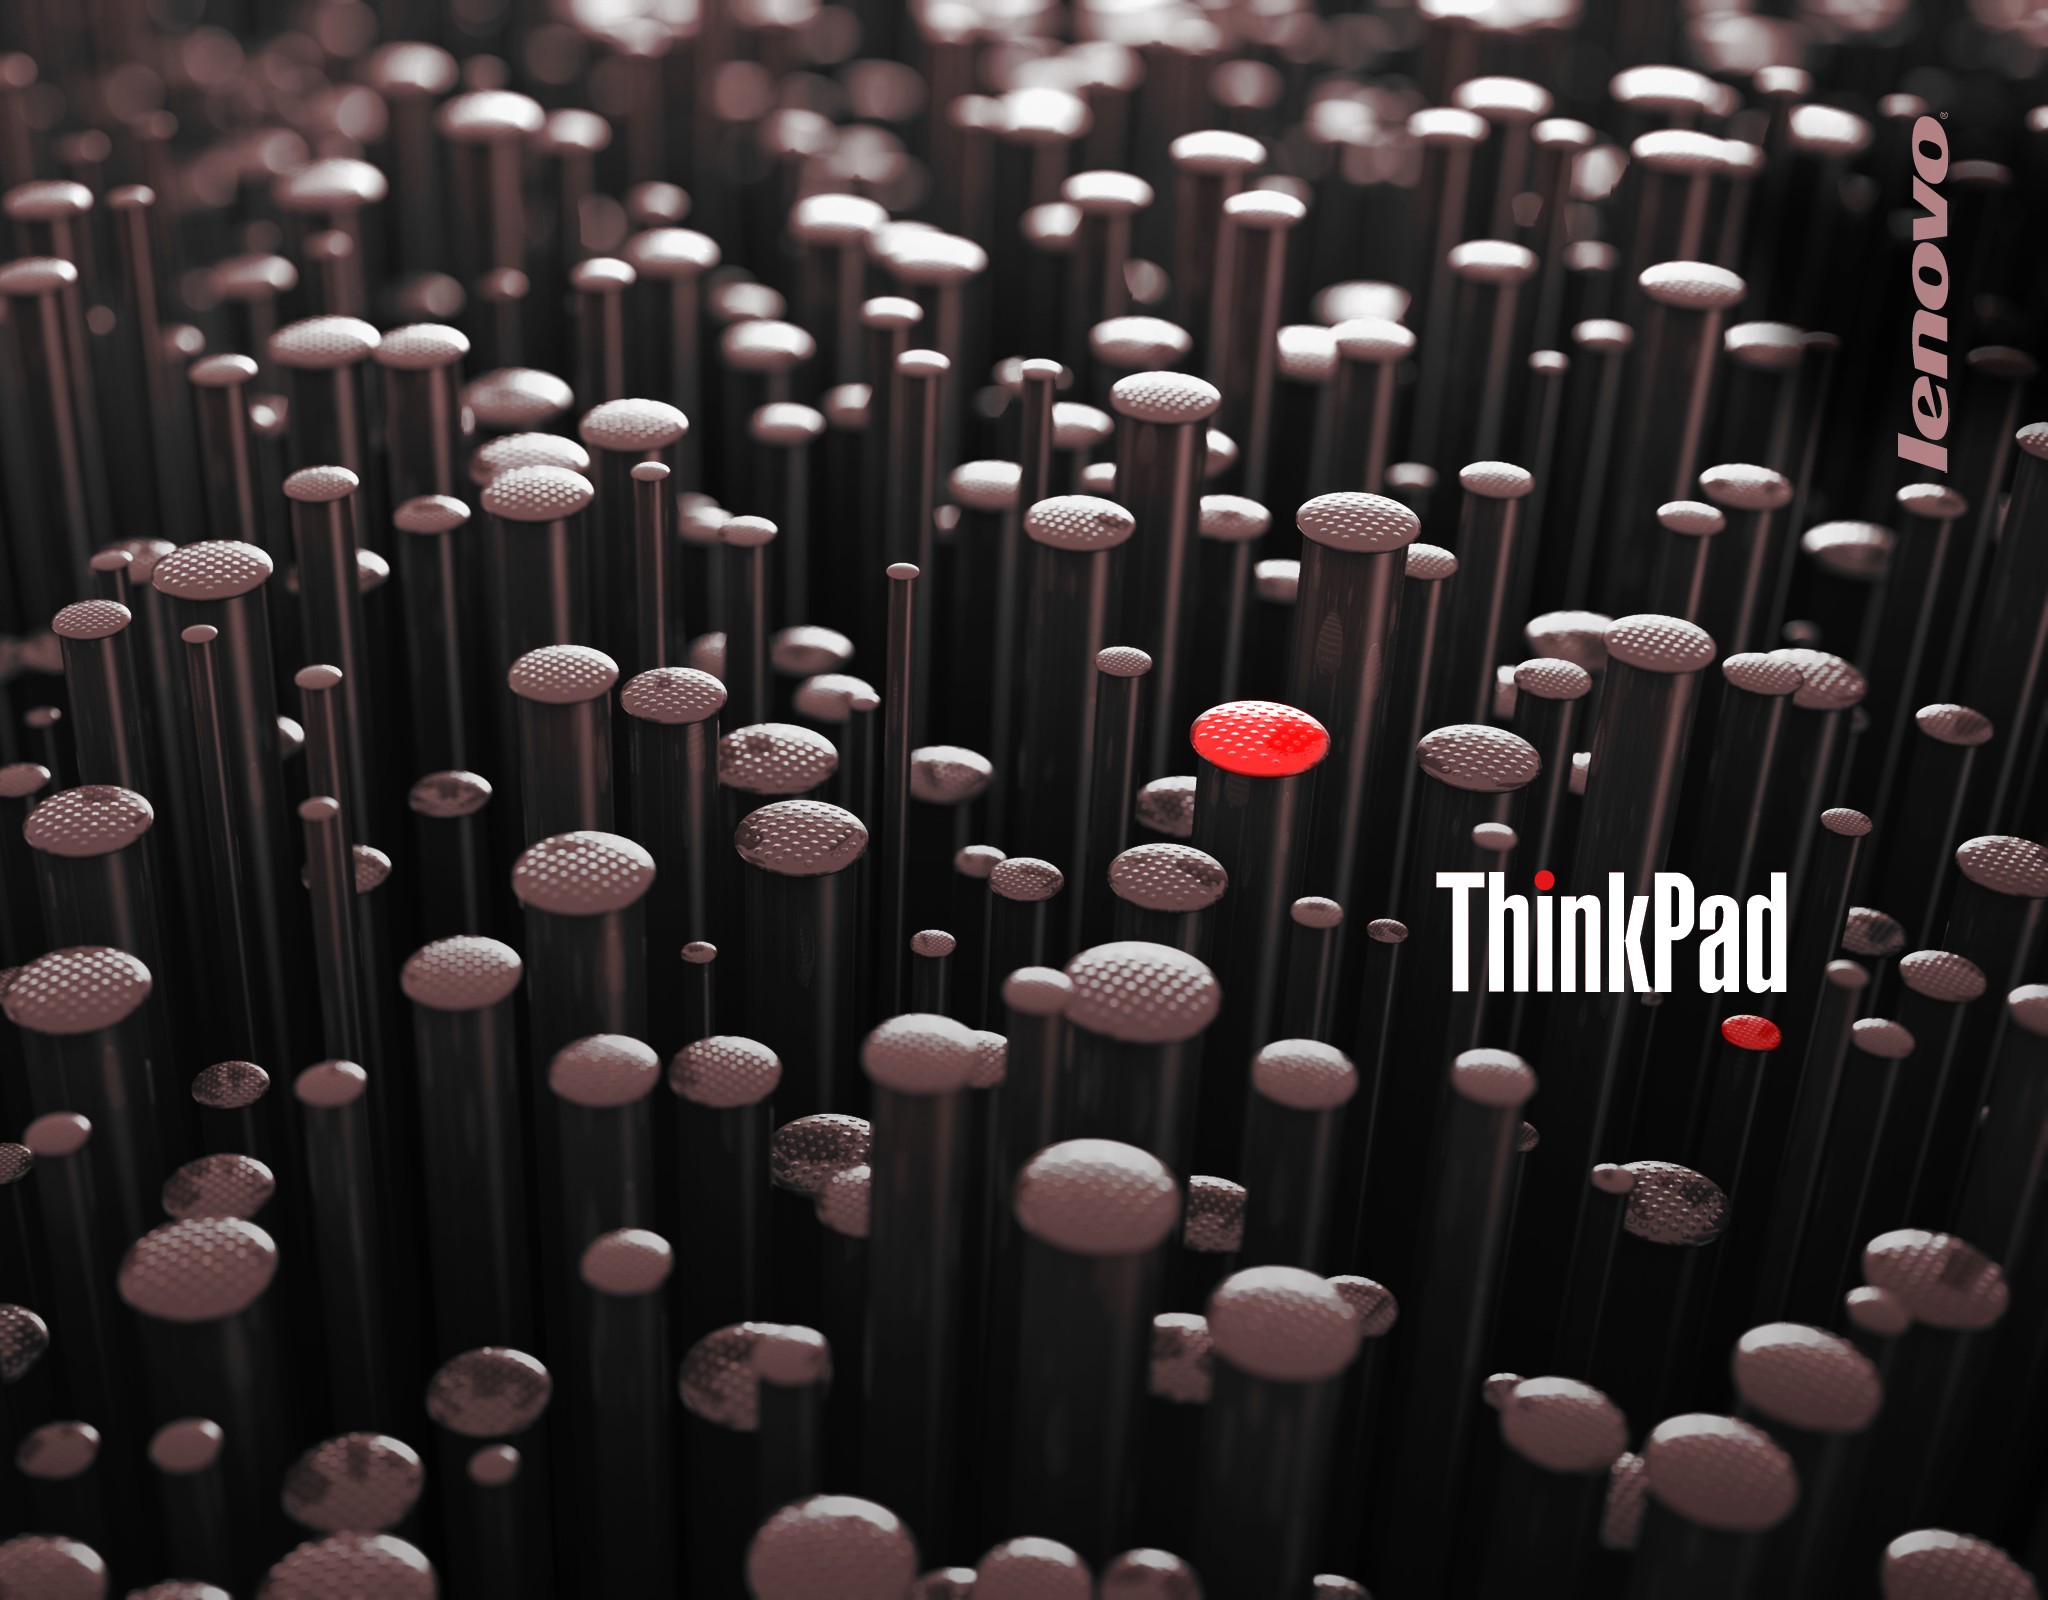 General 2048x1600 ThinkPad Lenovo digital art